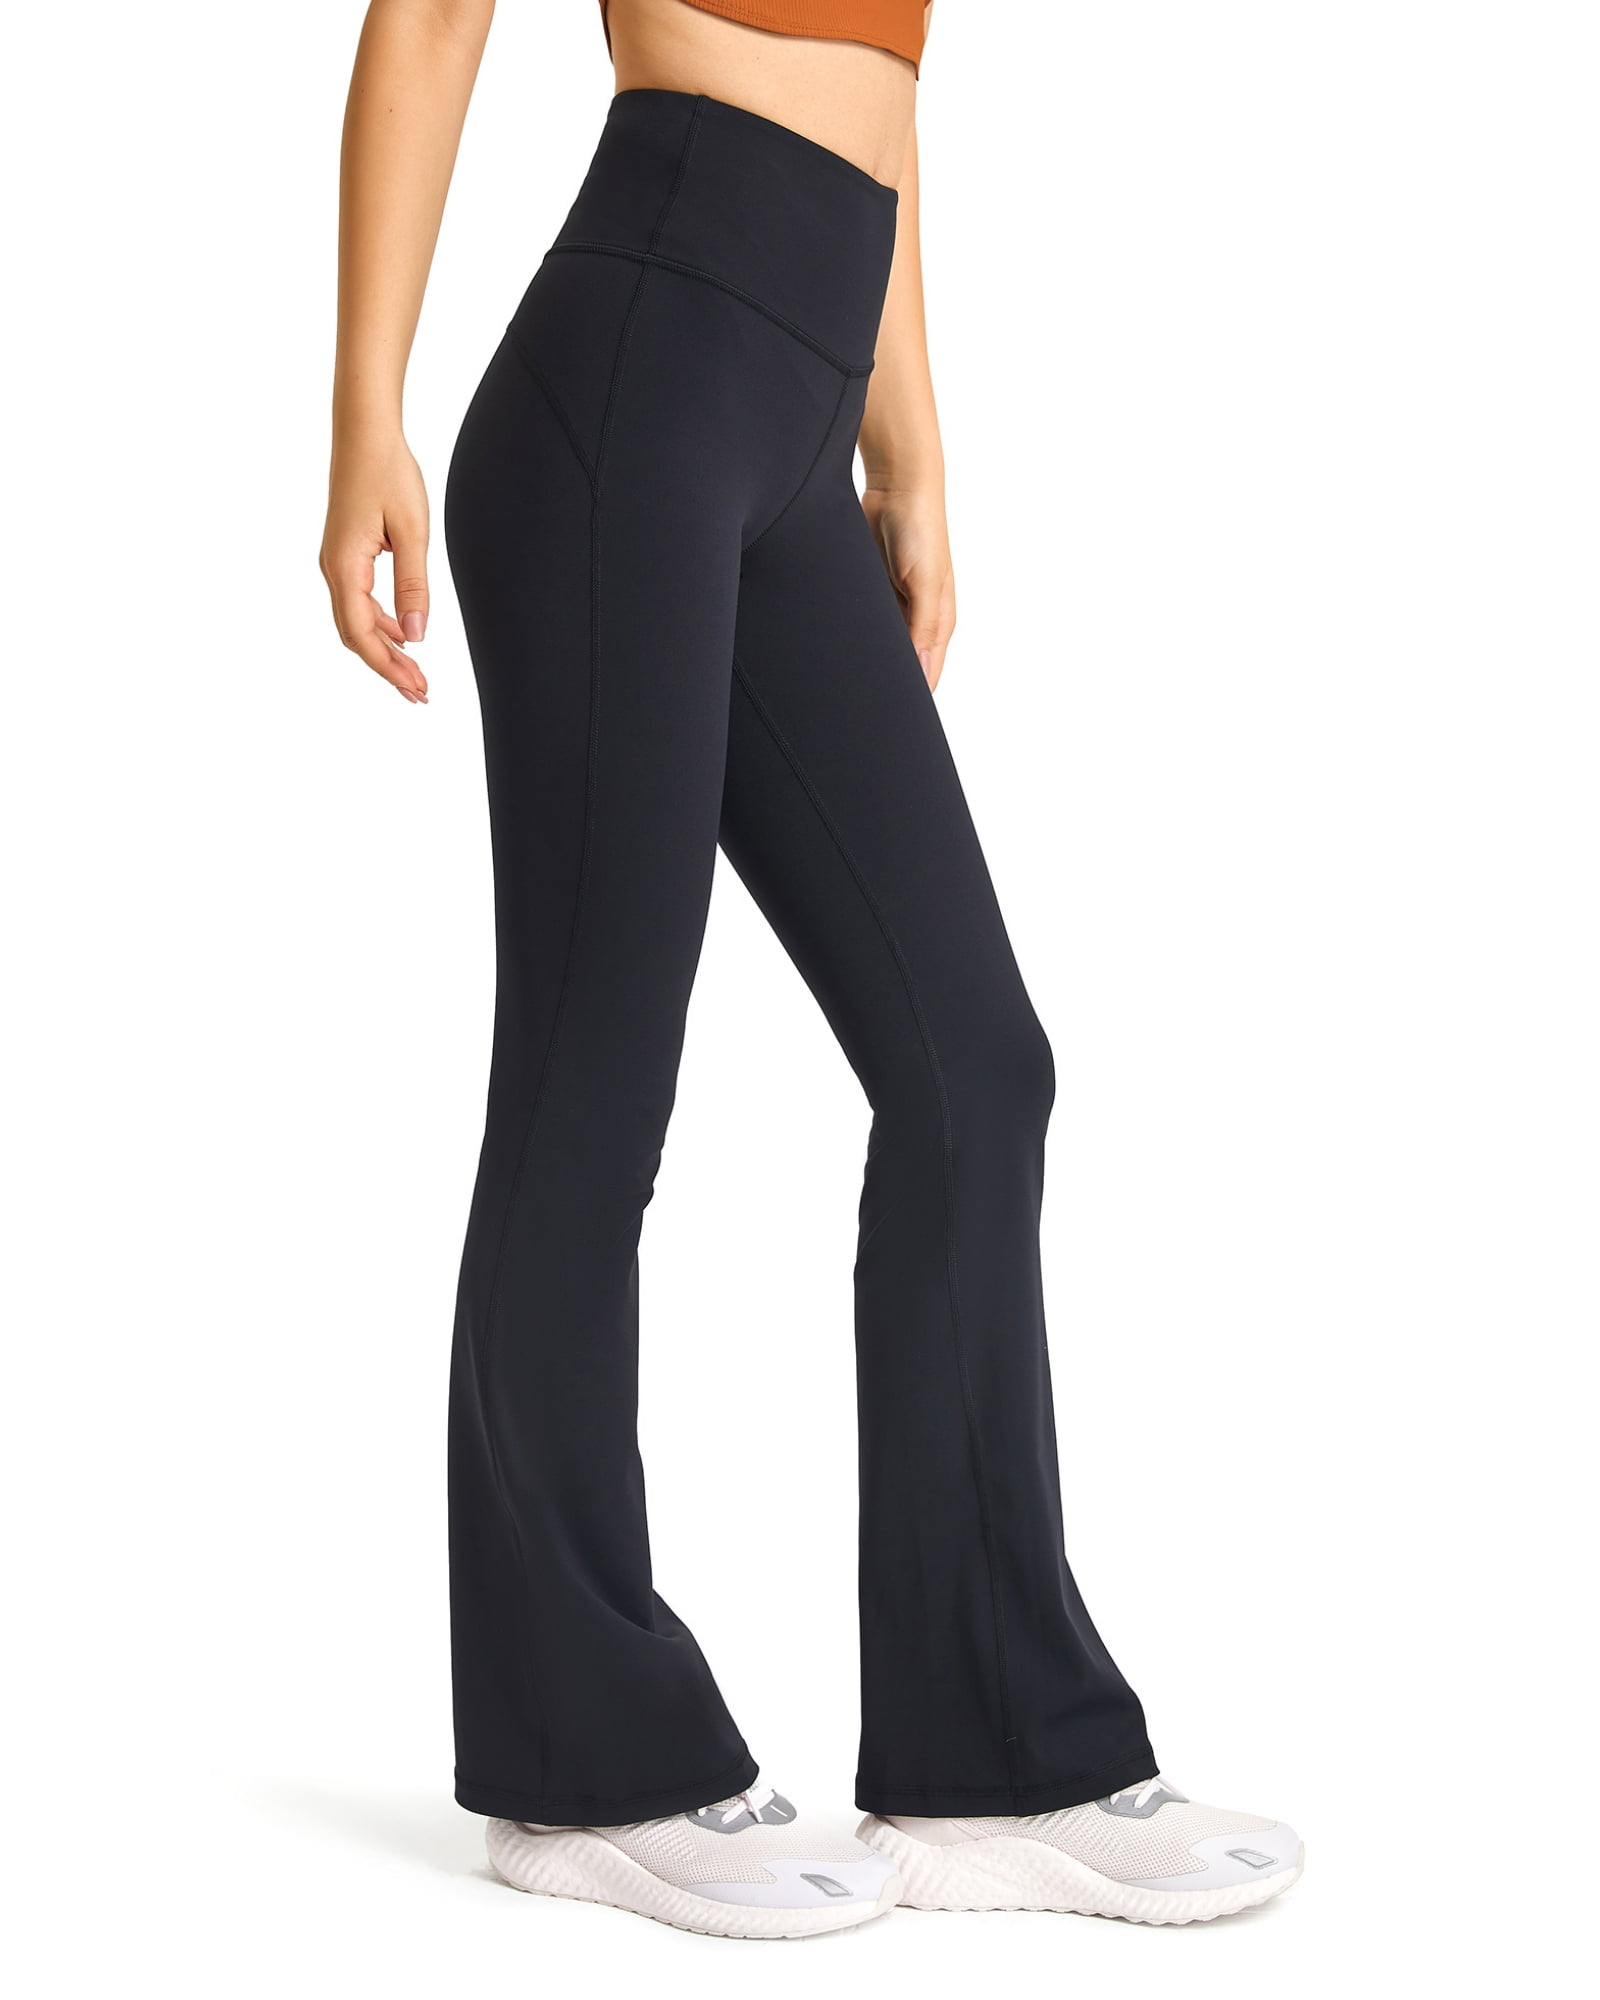 Women High Waist Yoga Pants 80% Nylon 20% Spandex Tummy Control